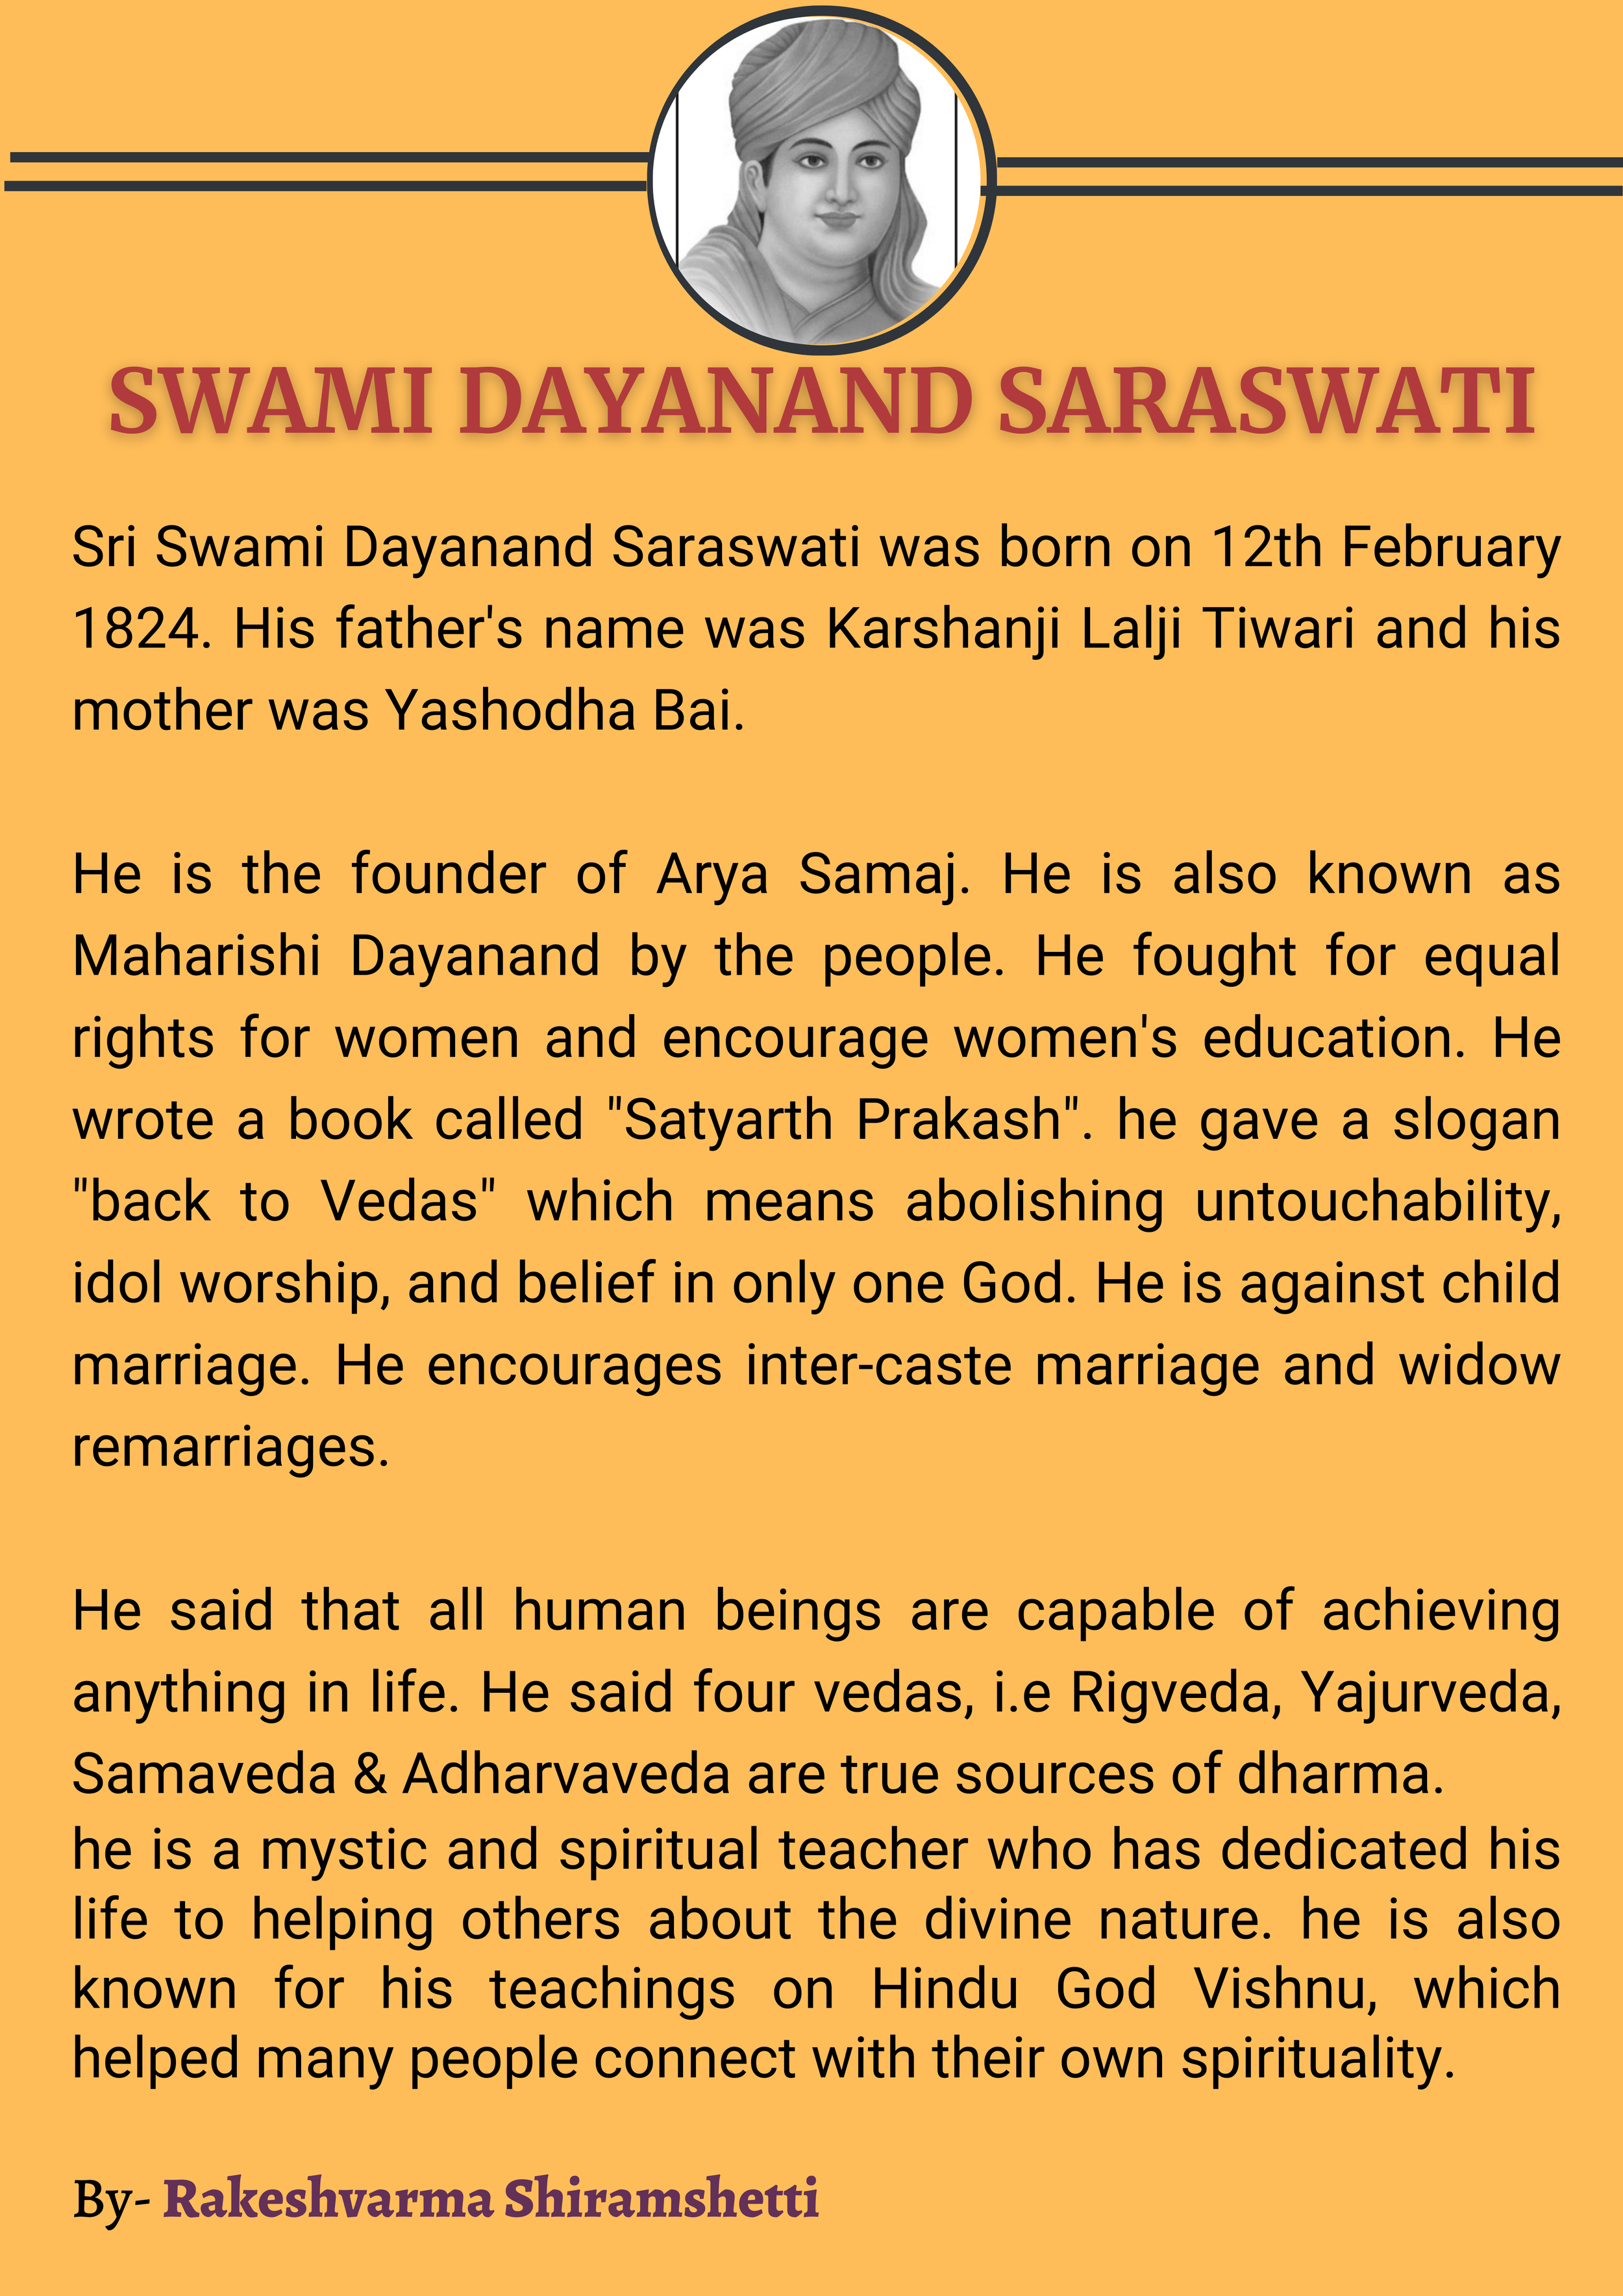 400 words essay on dayanand saraswati